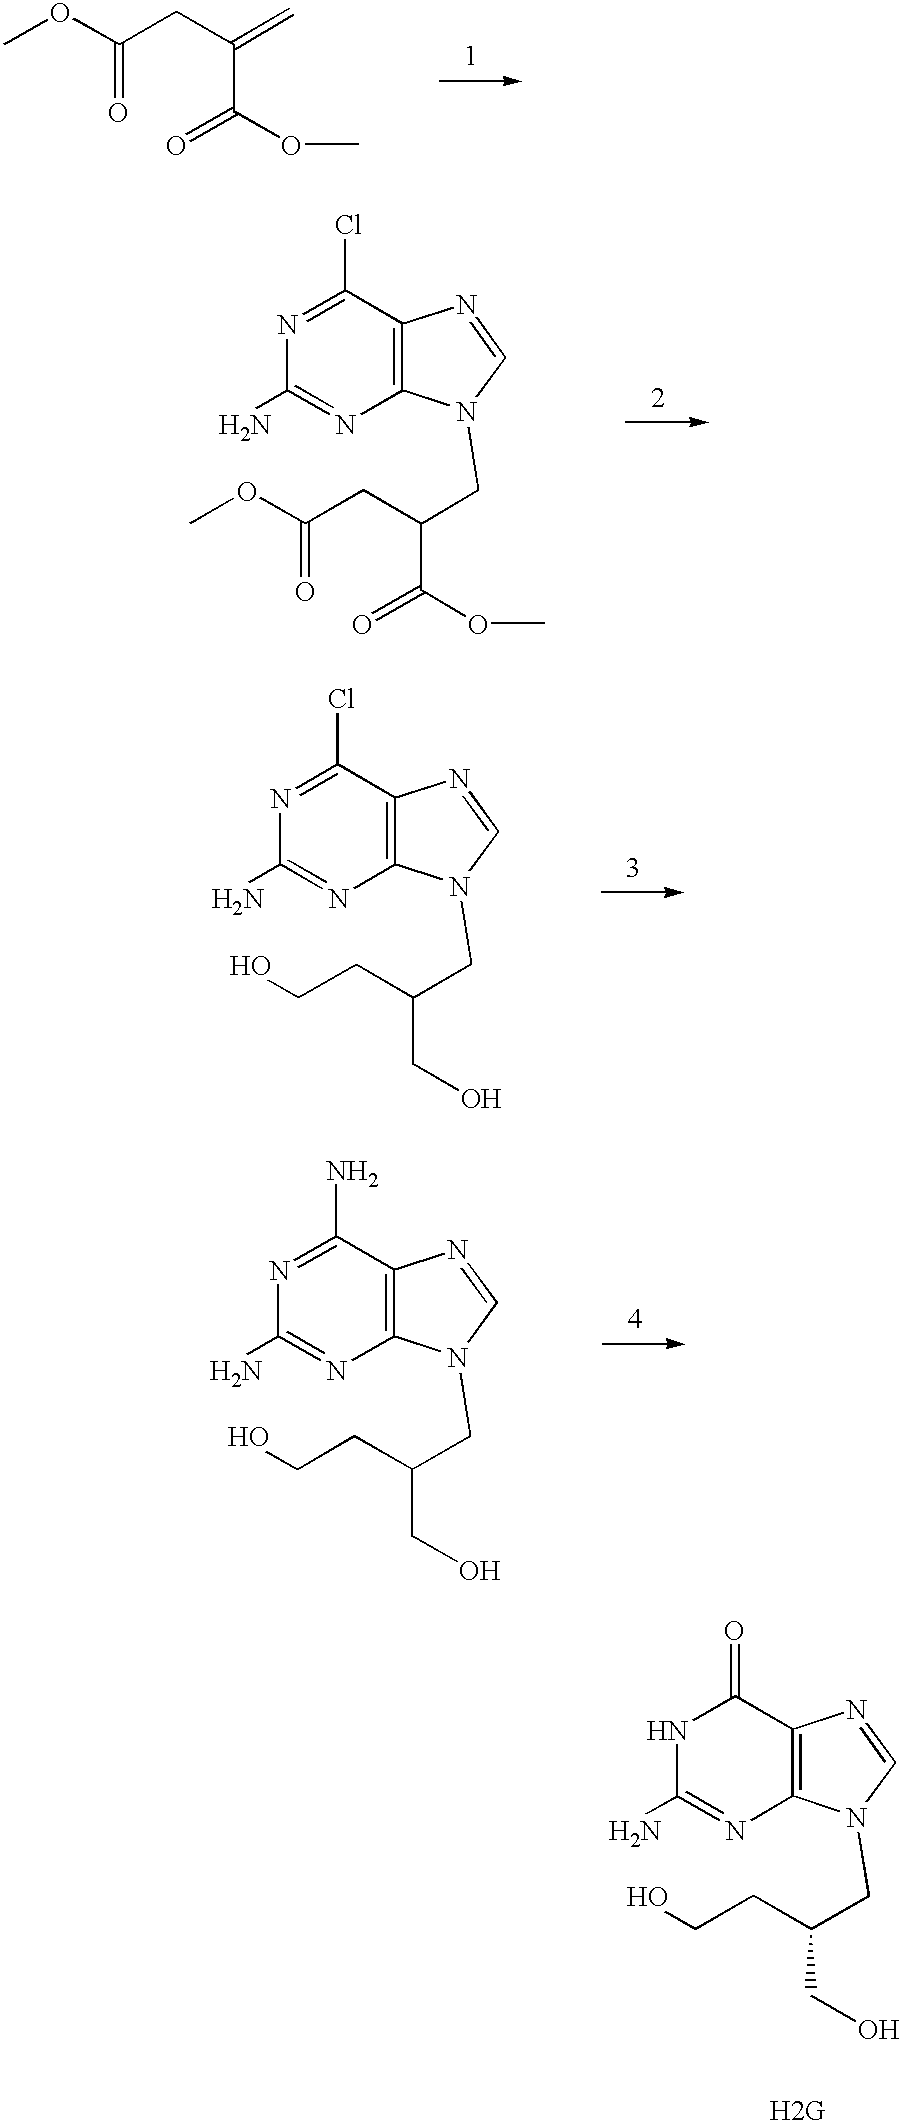 Acyclic nucleoside derivatives